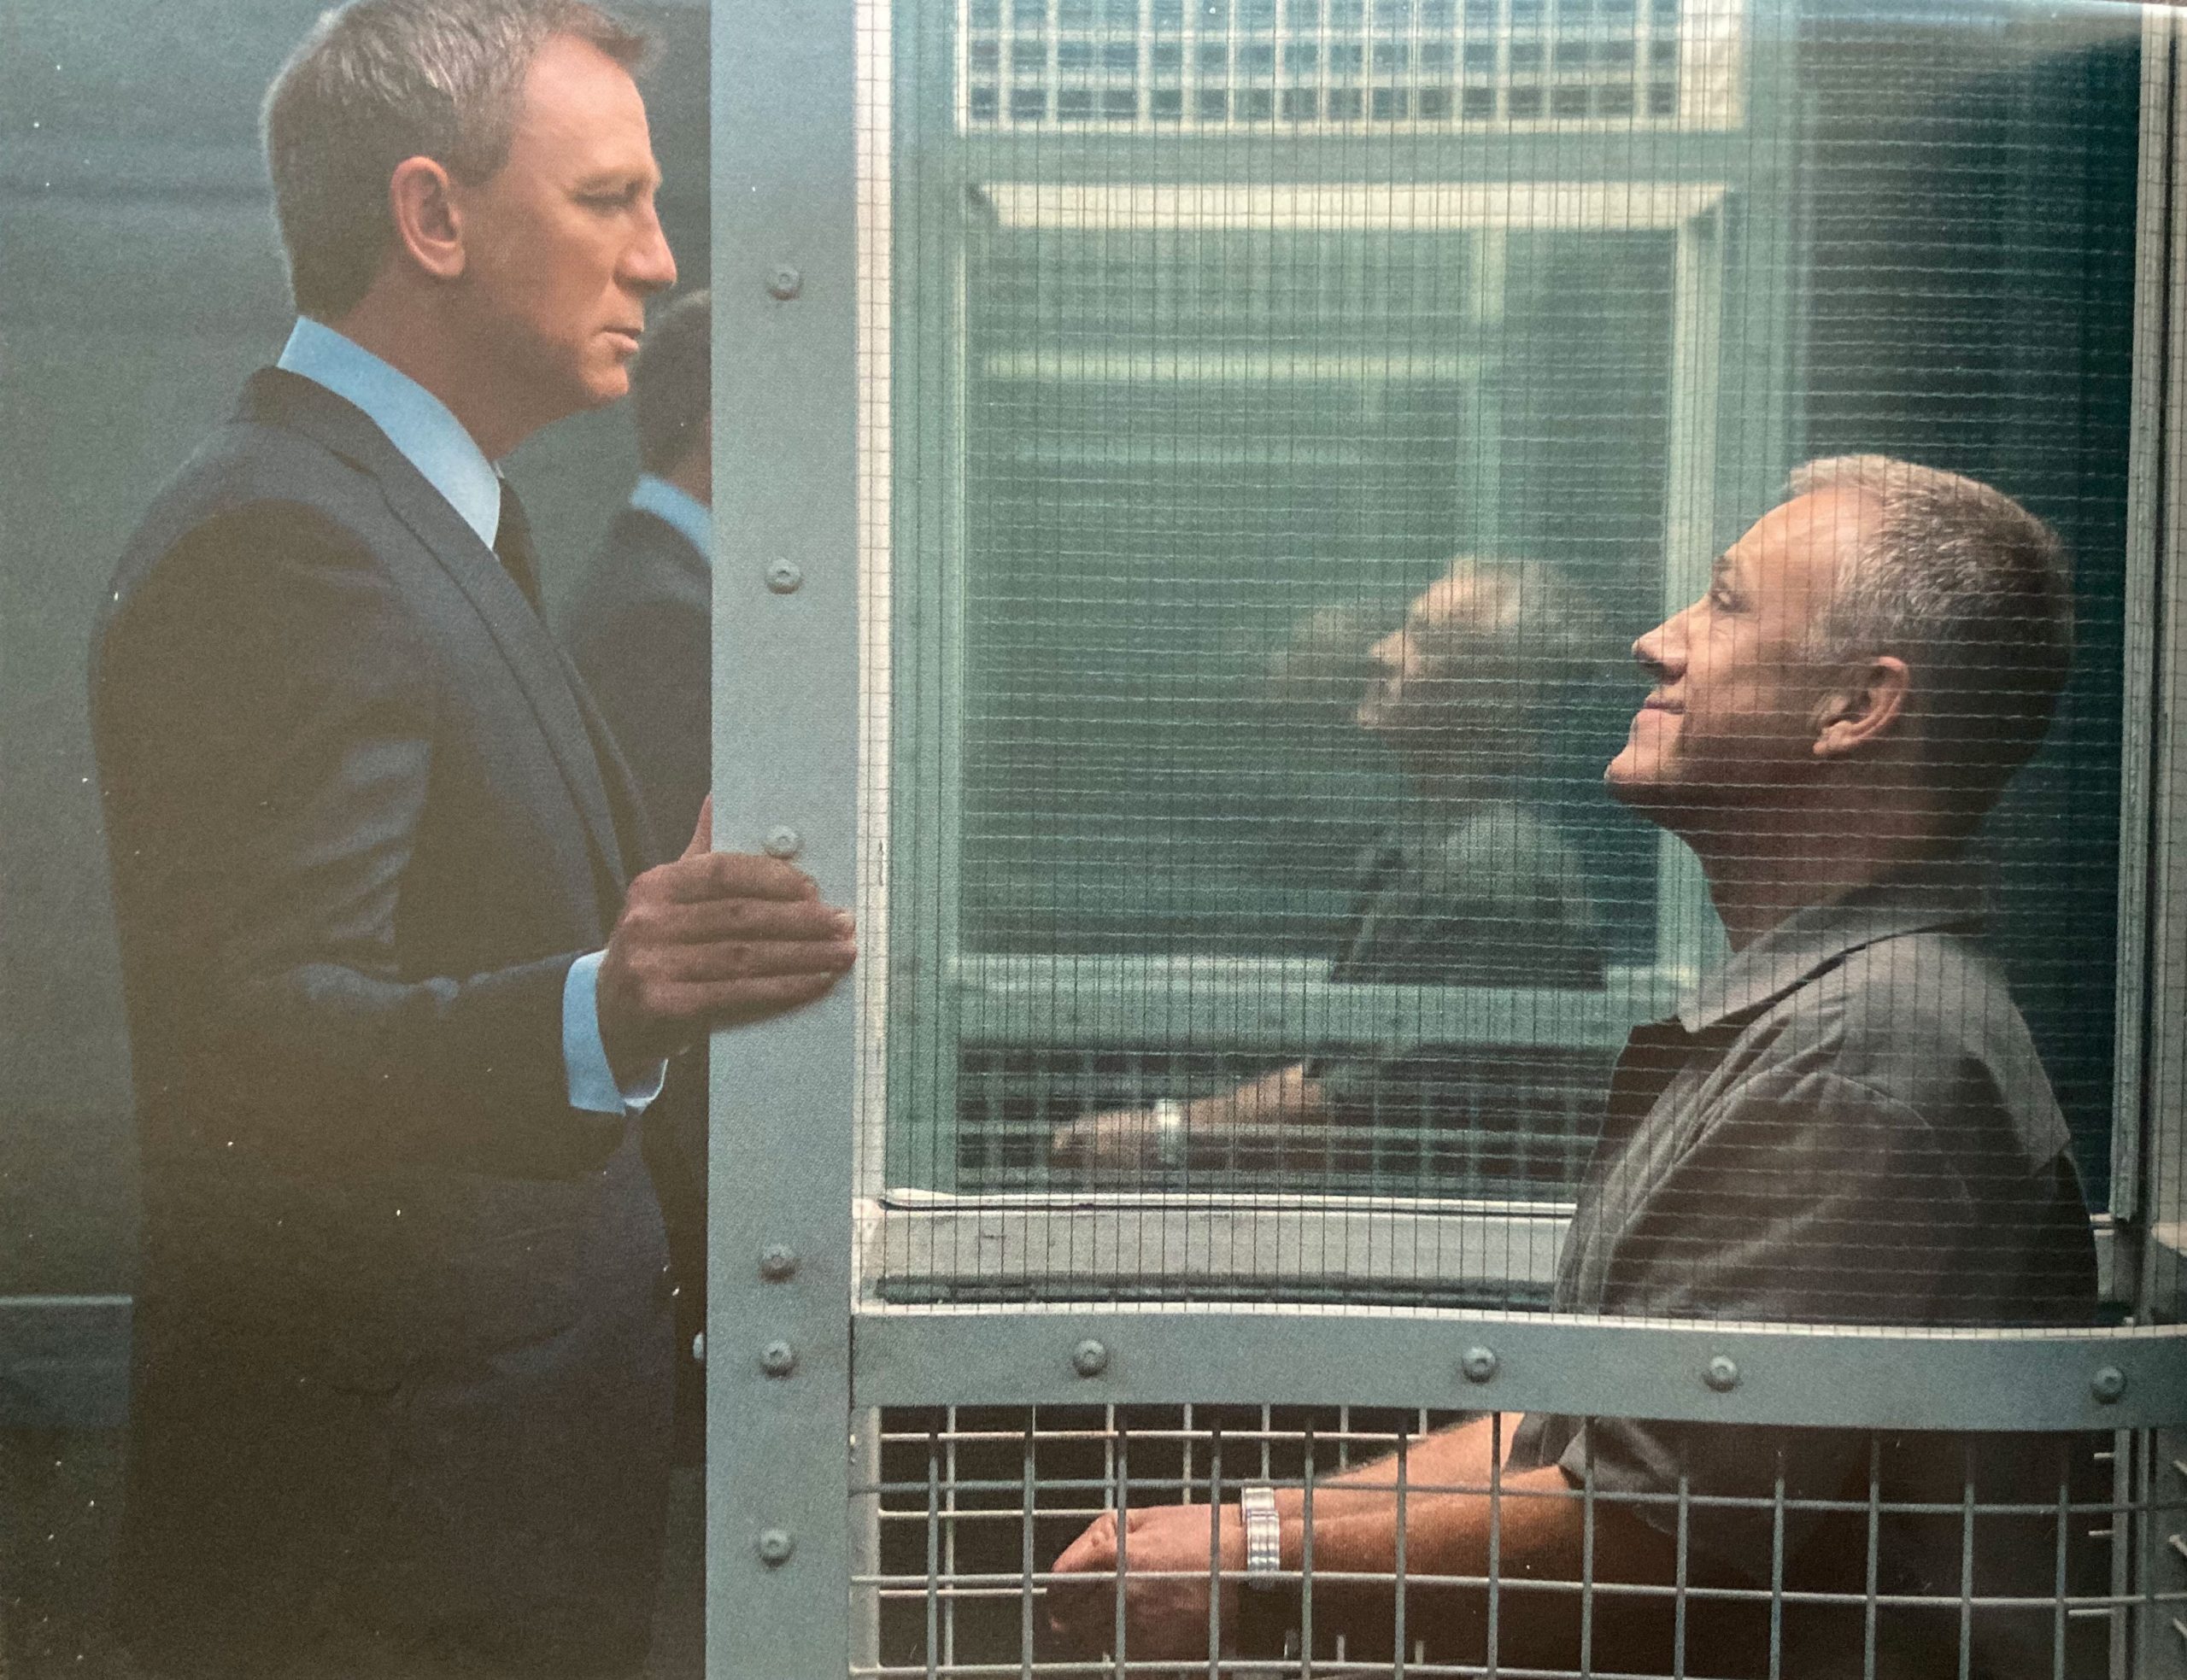 Daniel Craig Blue Check suit and Christoph Waltz as Blofeld